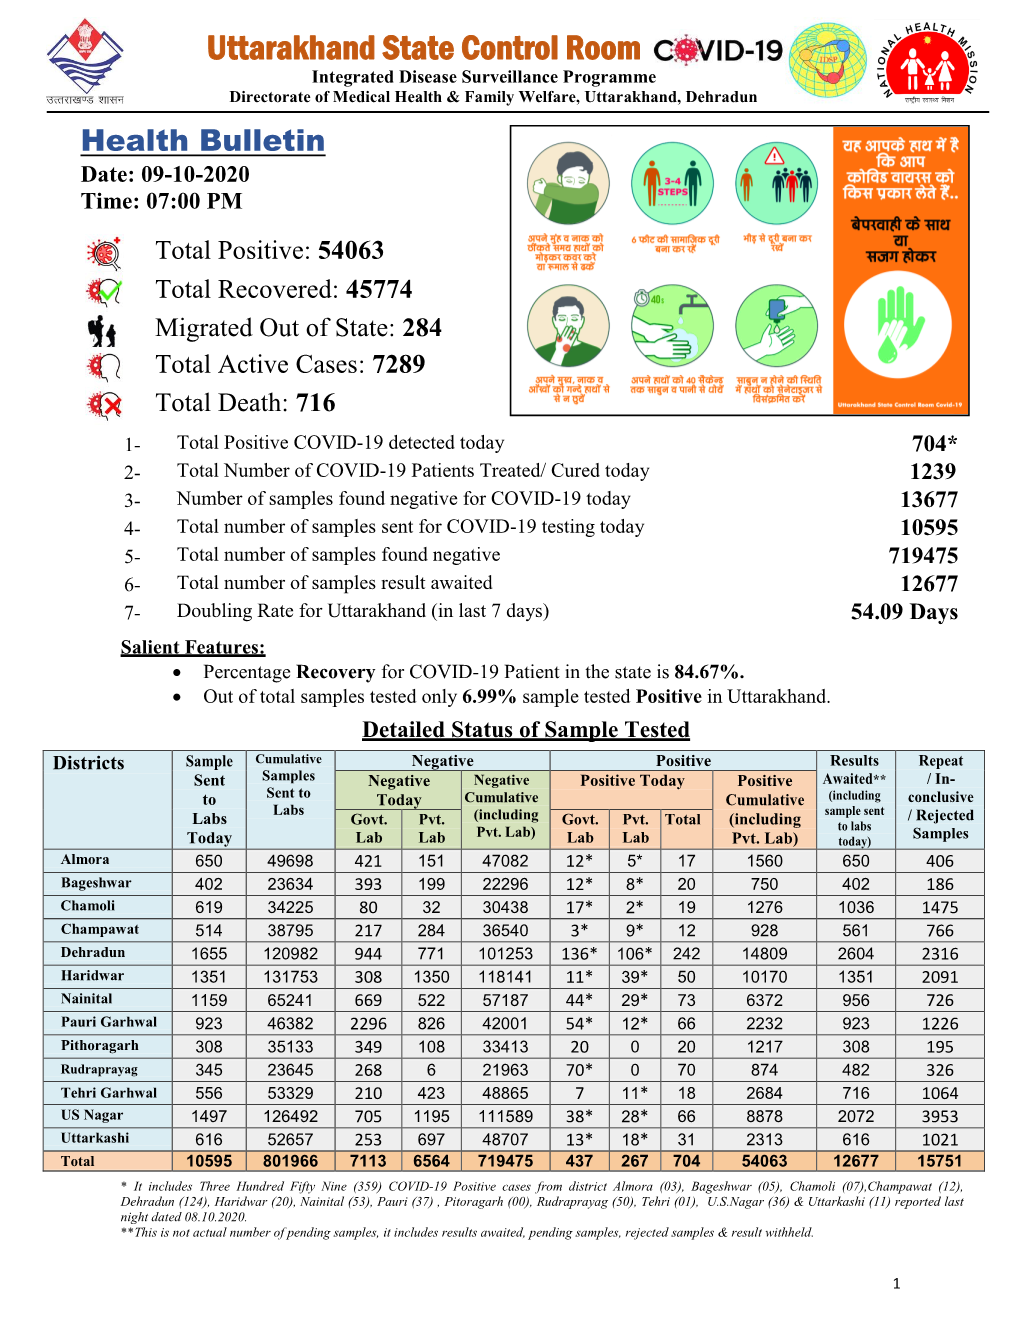 Health Bulletin COVID 19 Uttarakhand 09 October 2020